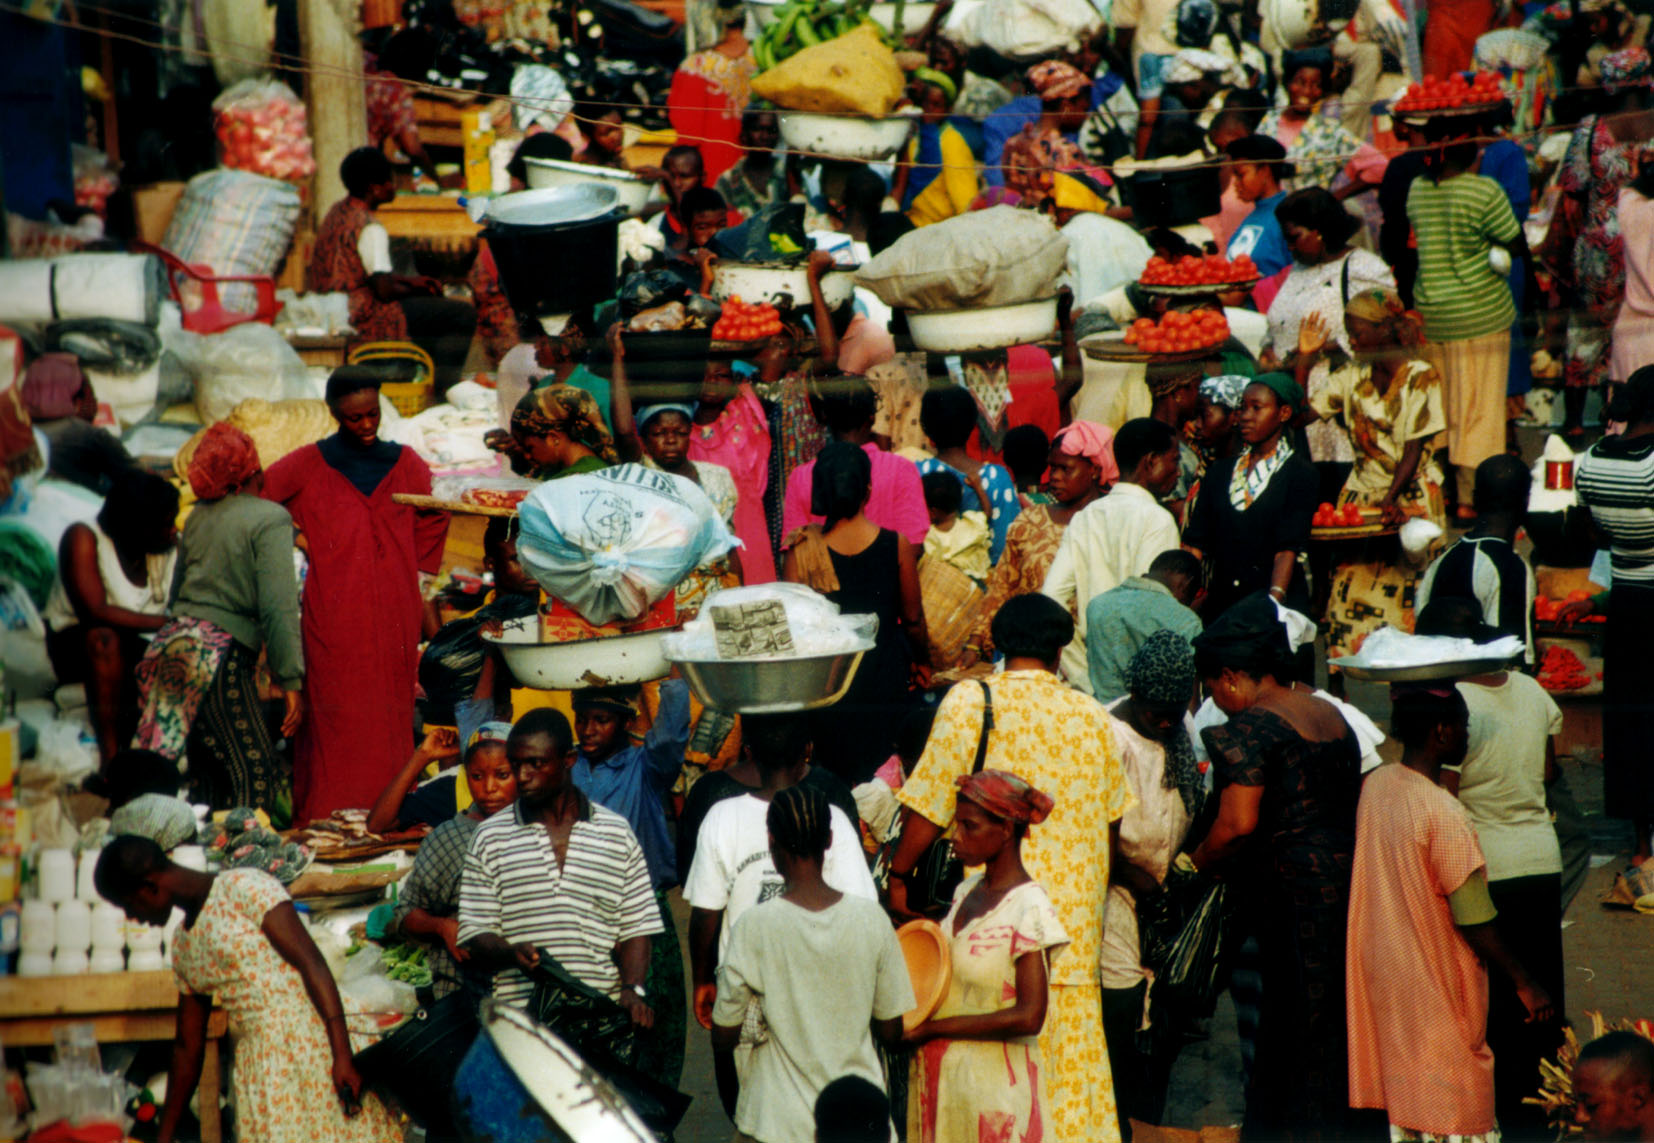 Kejetia, Kumasi central market, Ghana